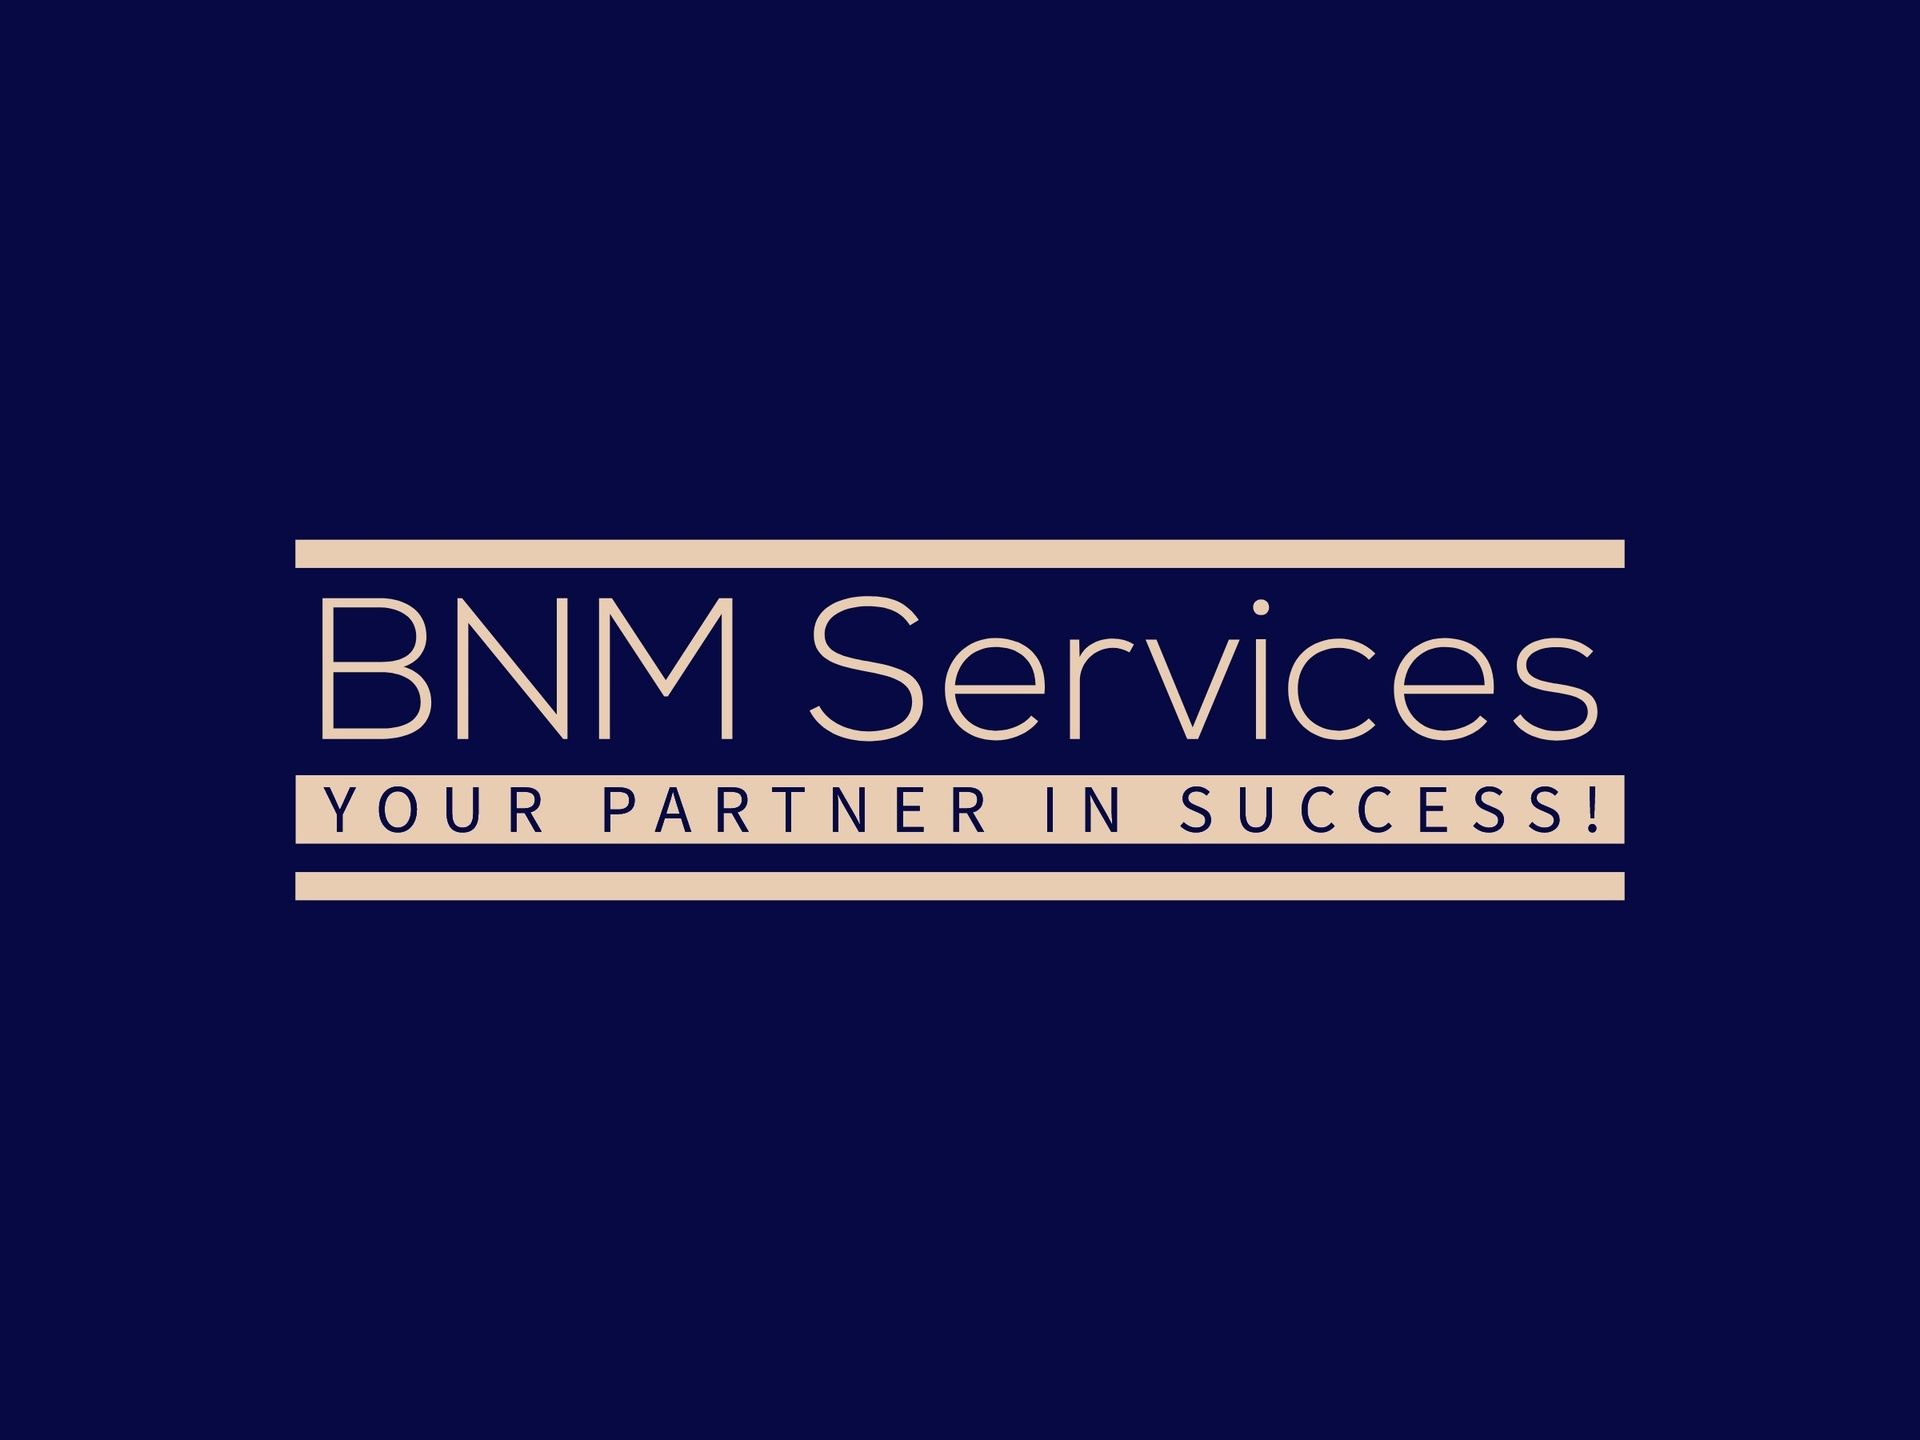 BNM Services